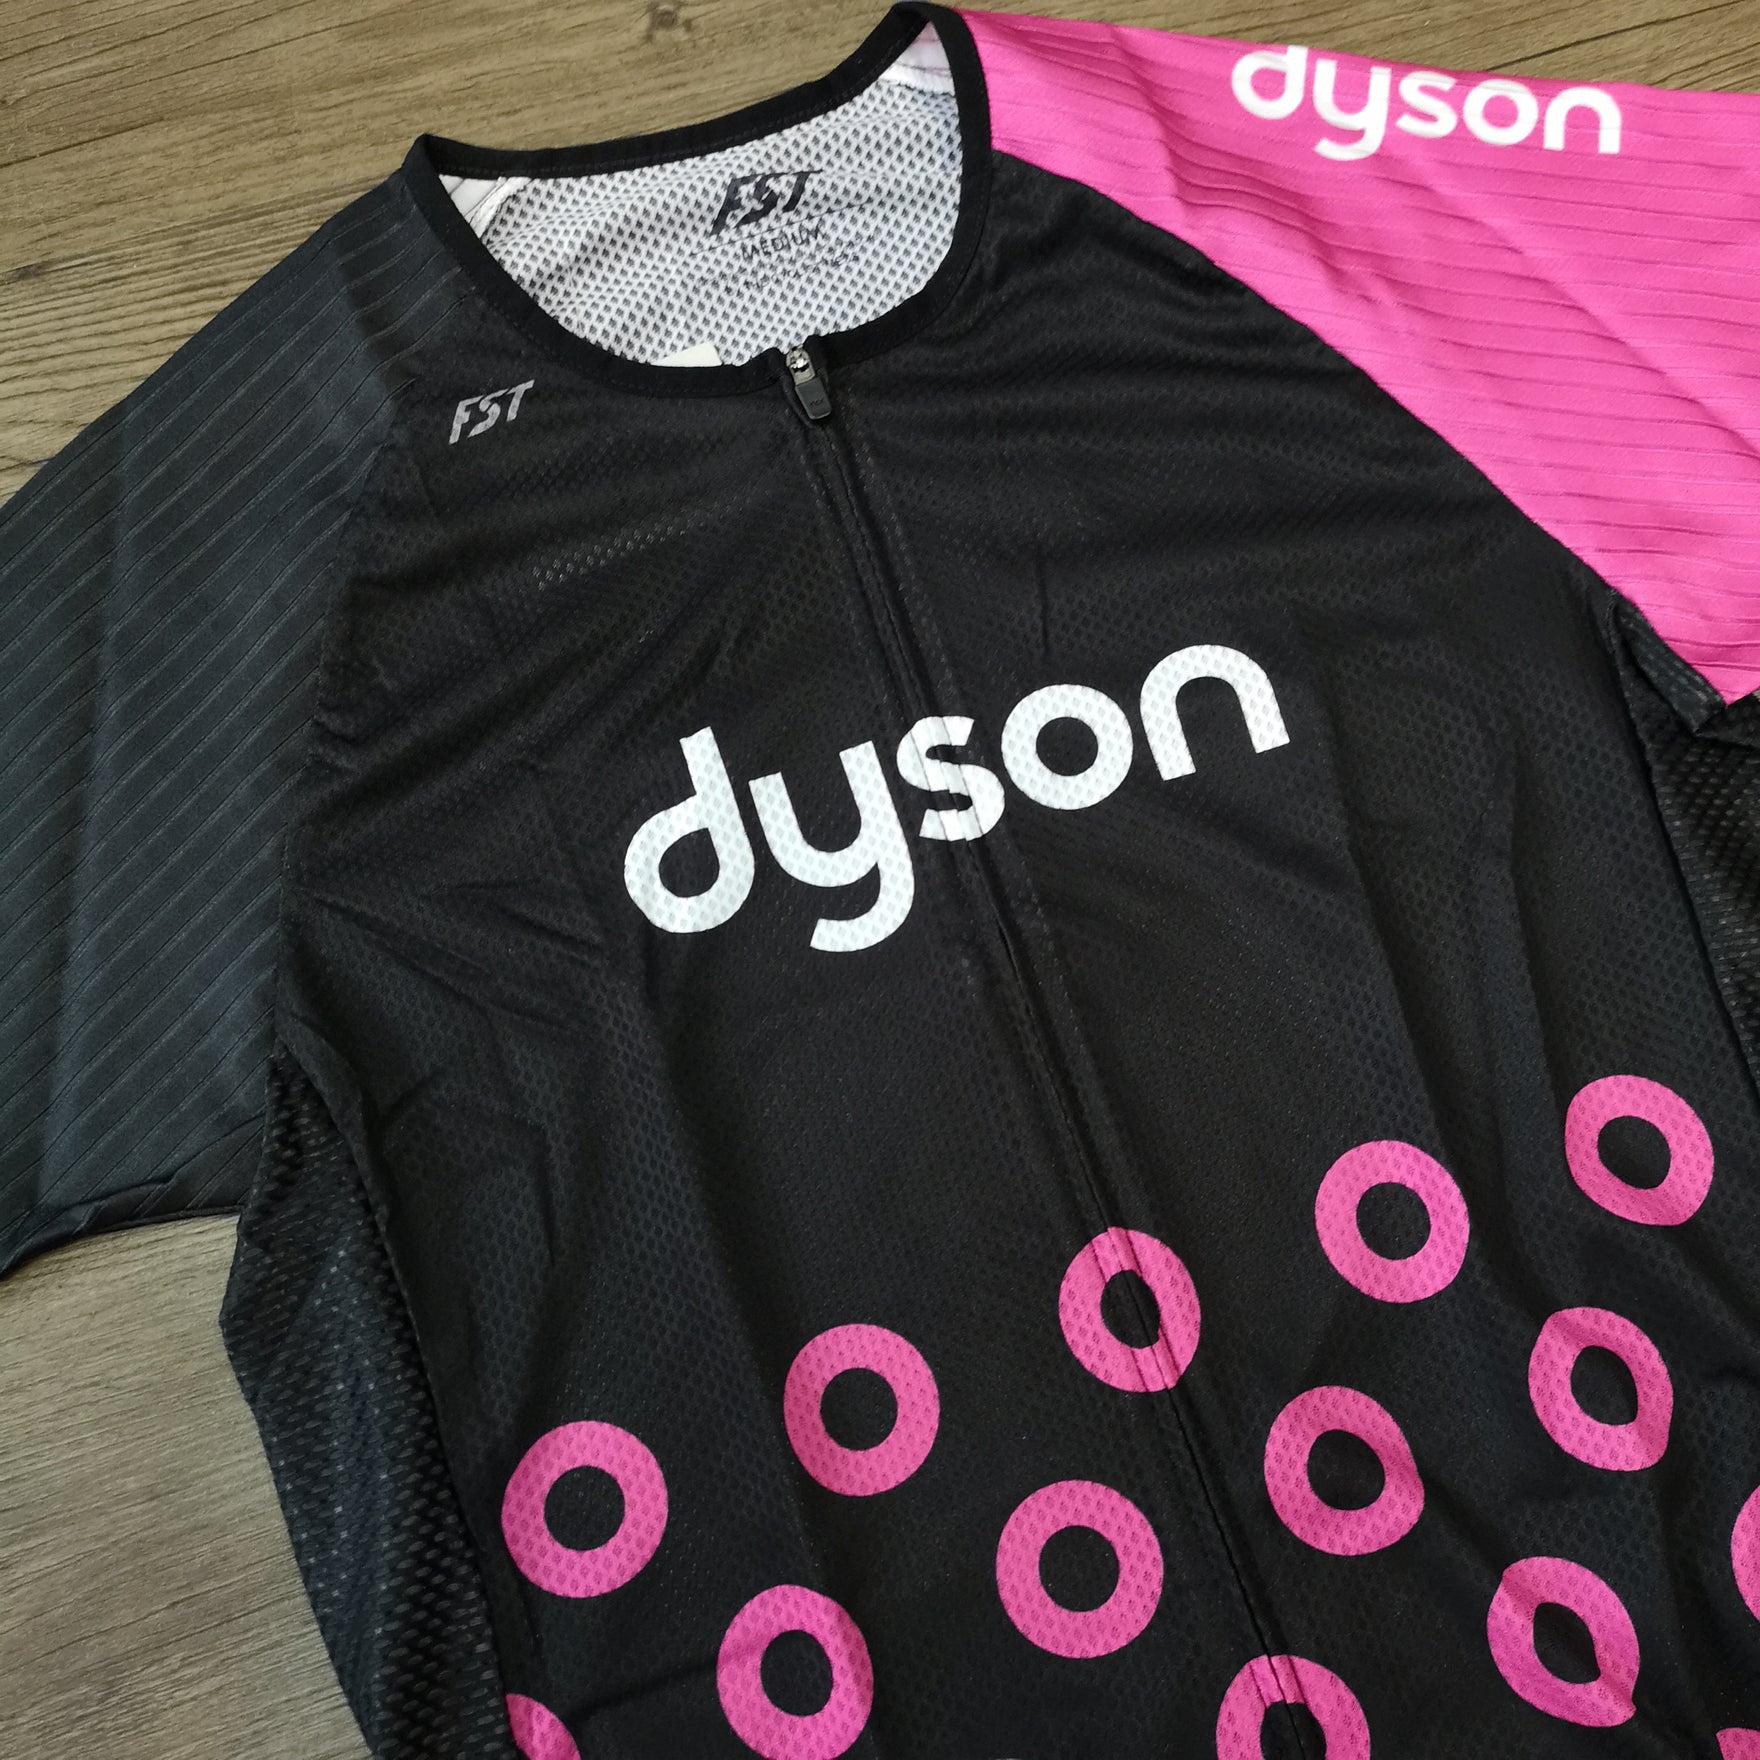 Dyson Singapore Cycling Team Jersey